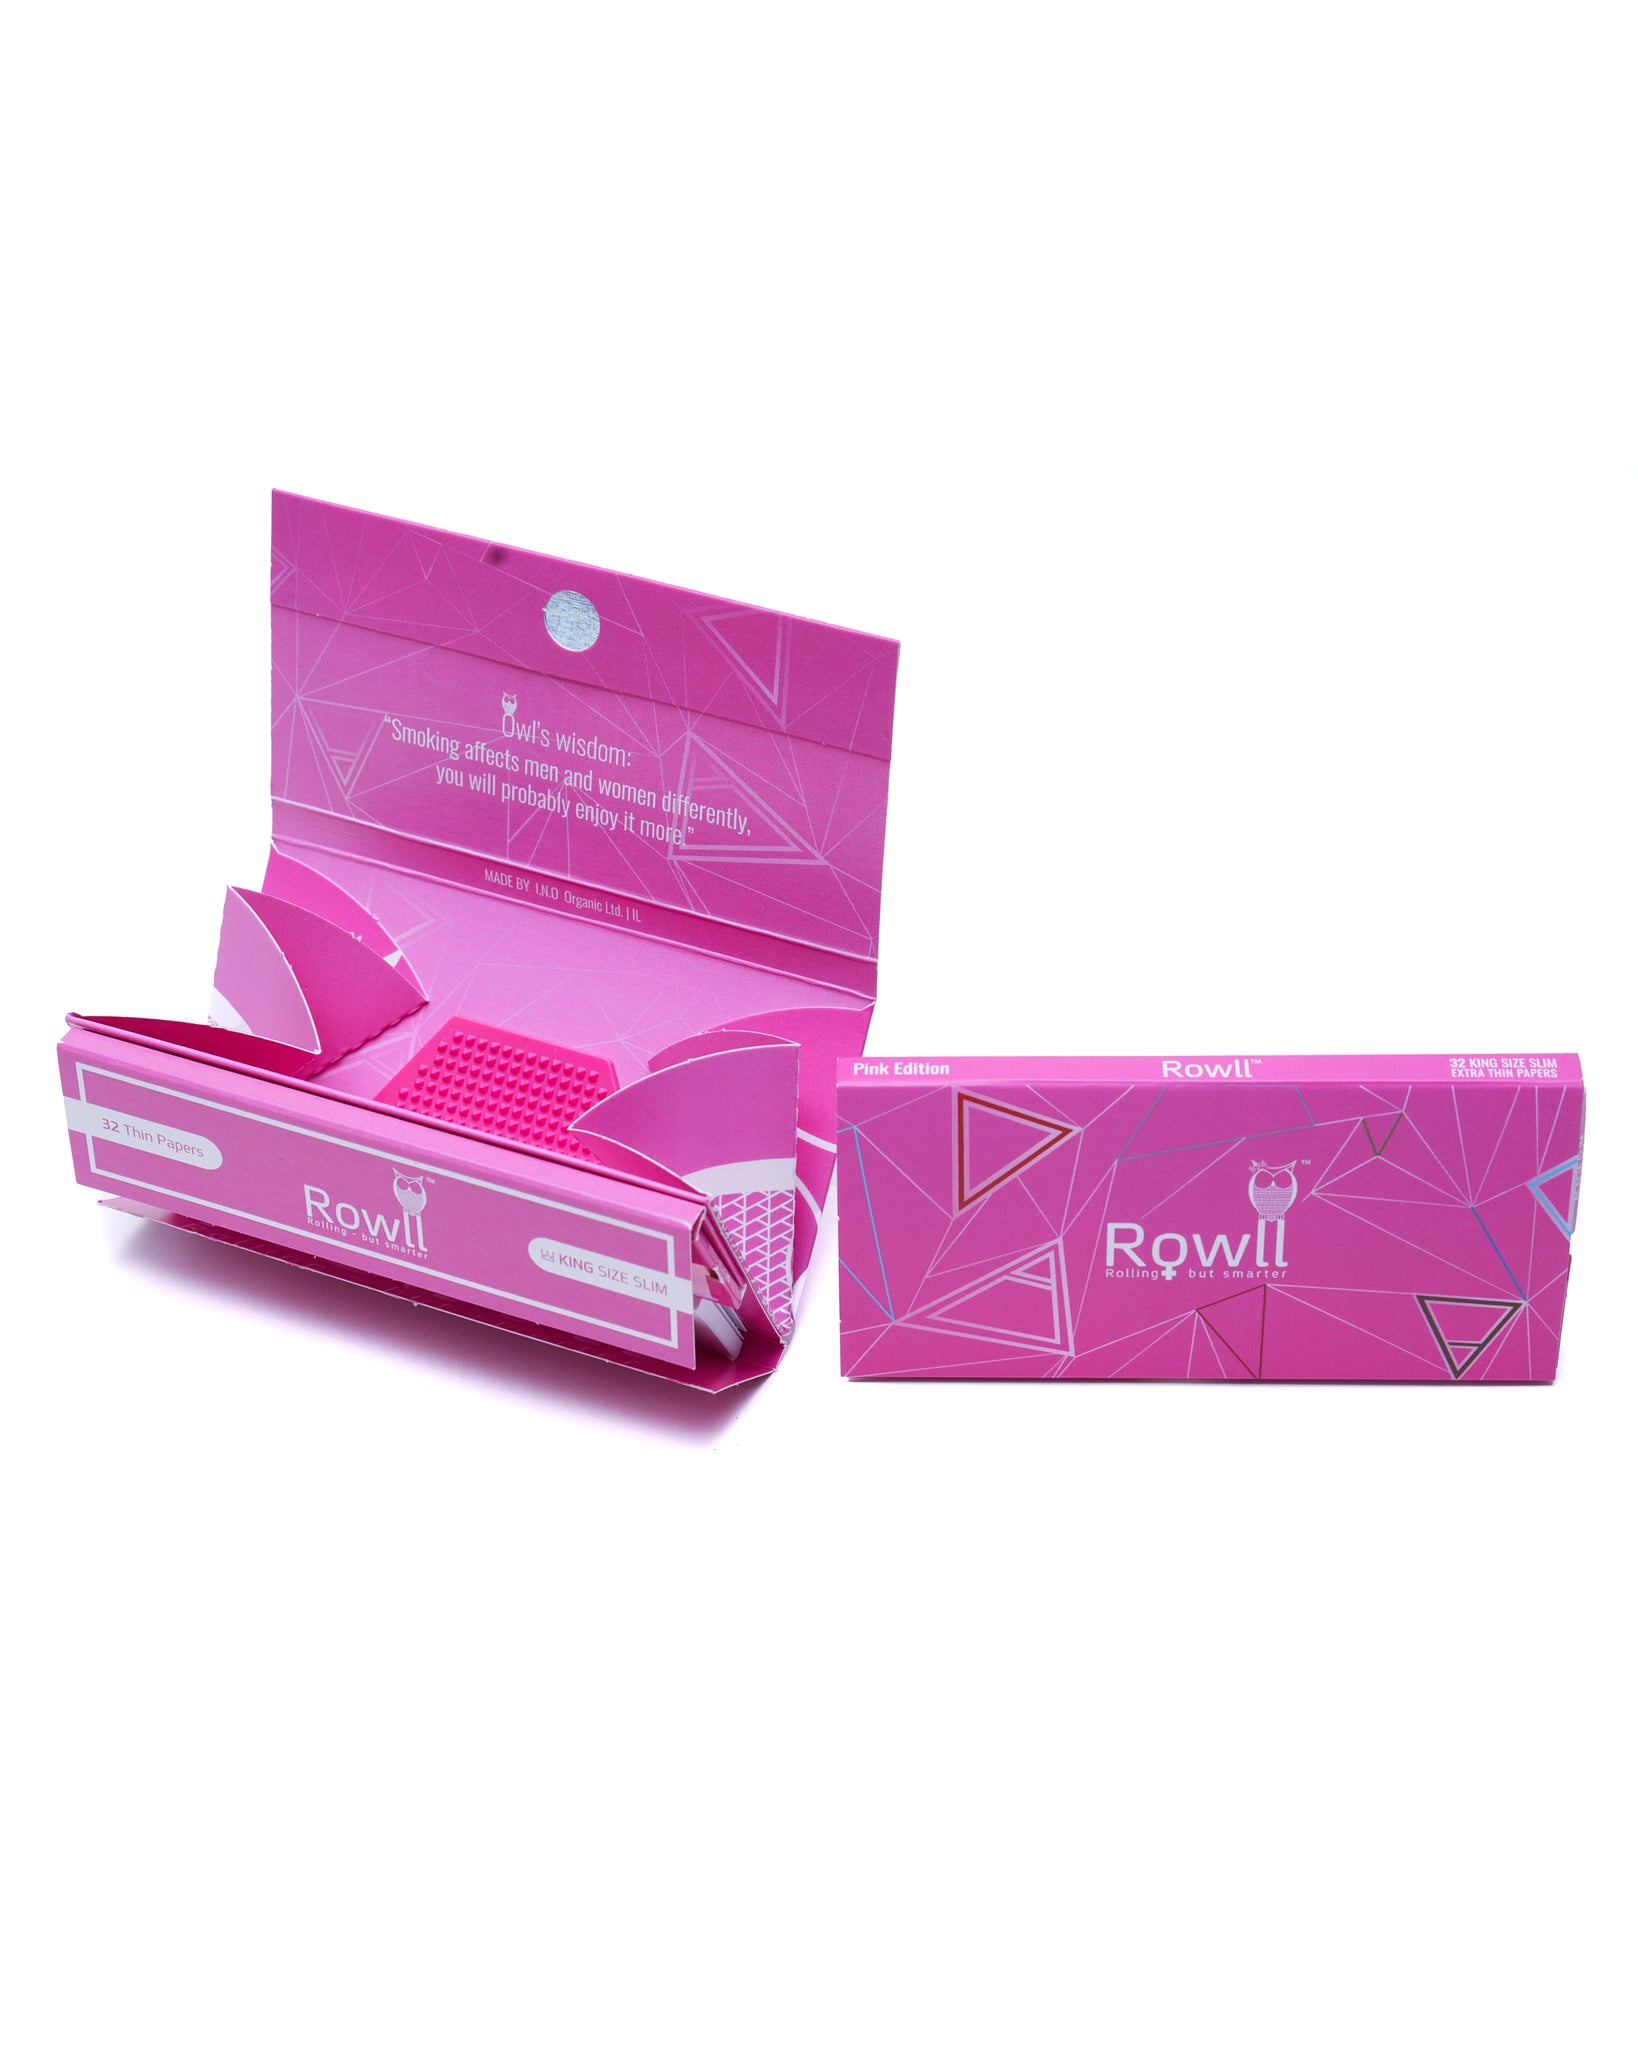 ROWLL all in 1 Rolling Kit 60 pcs Mega Pack – Rowll - Rolling but